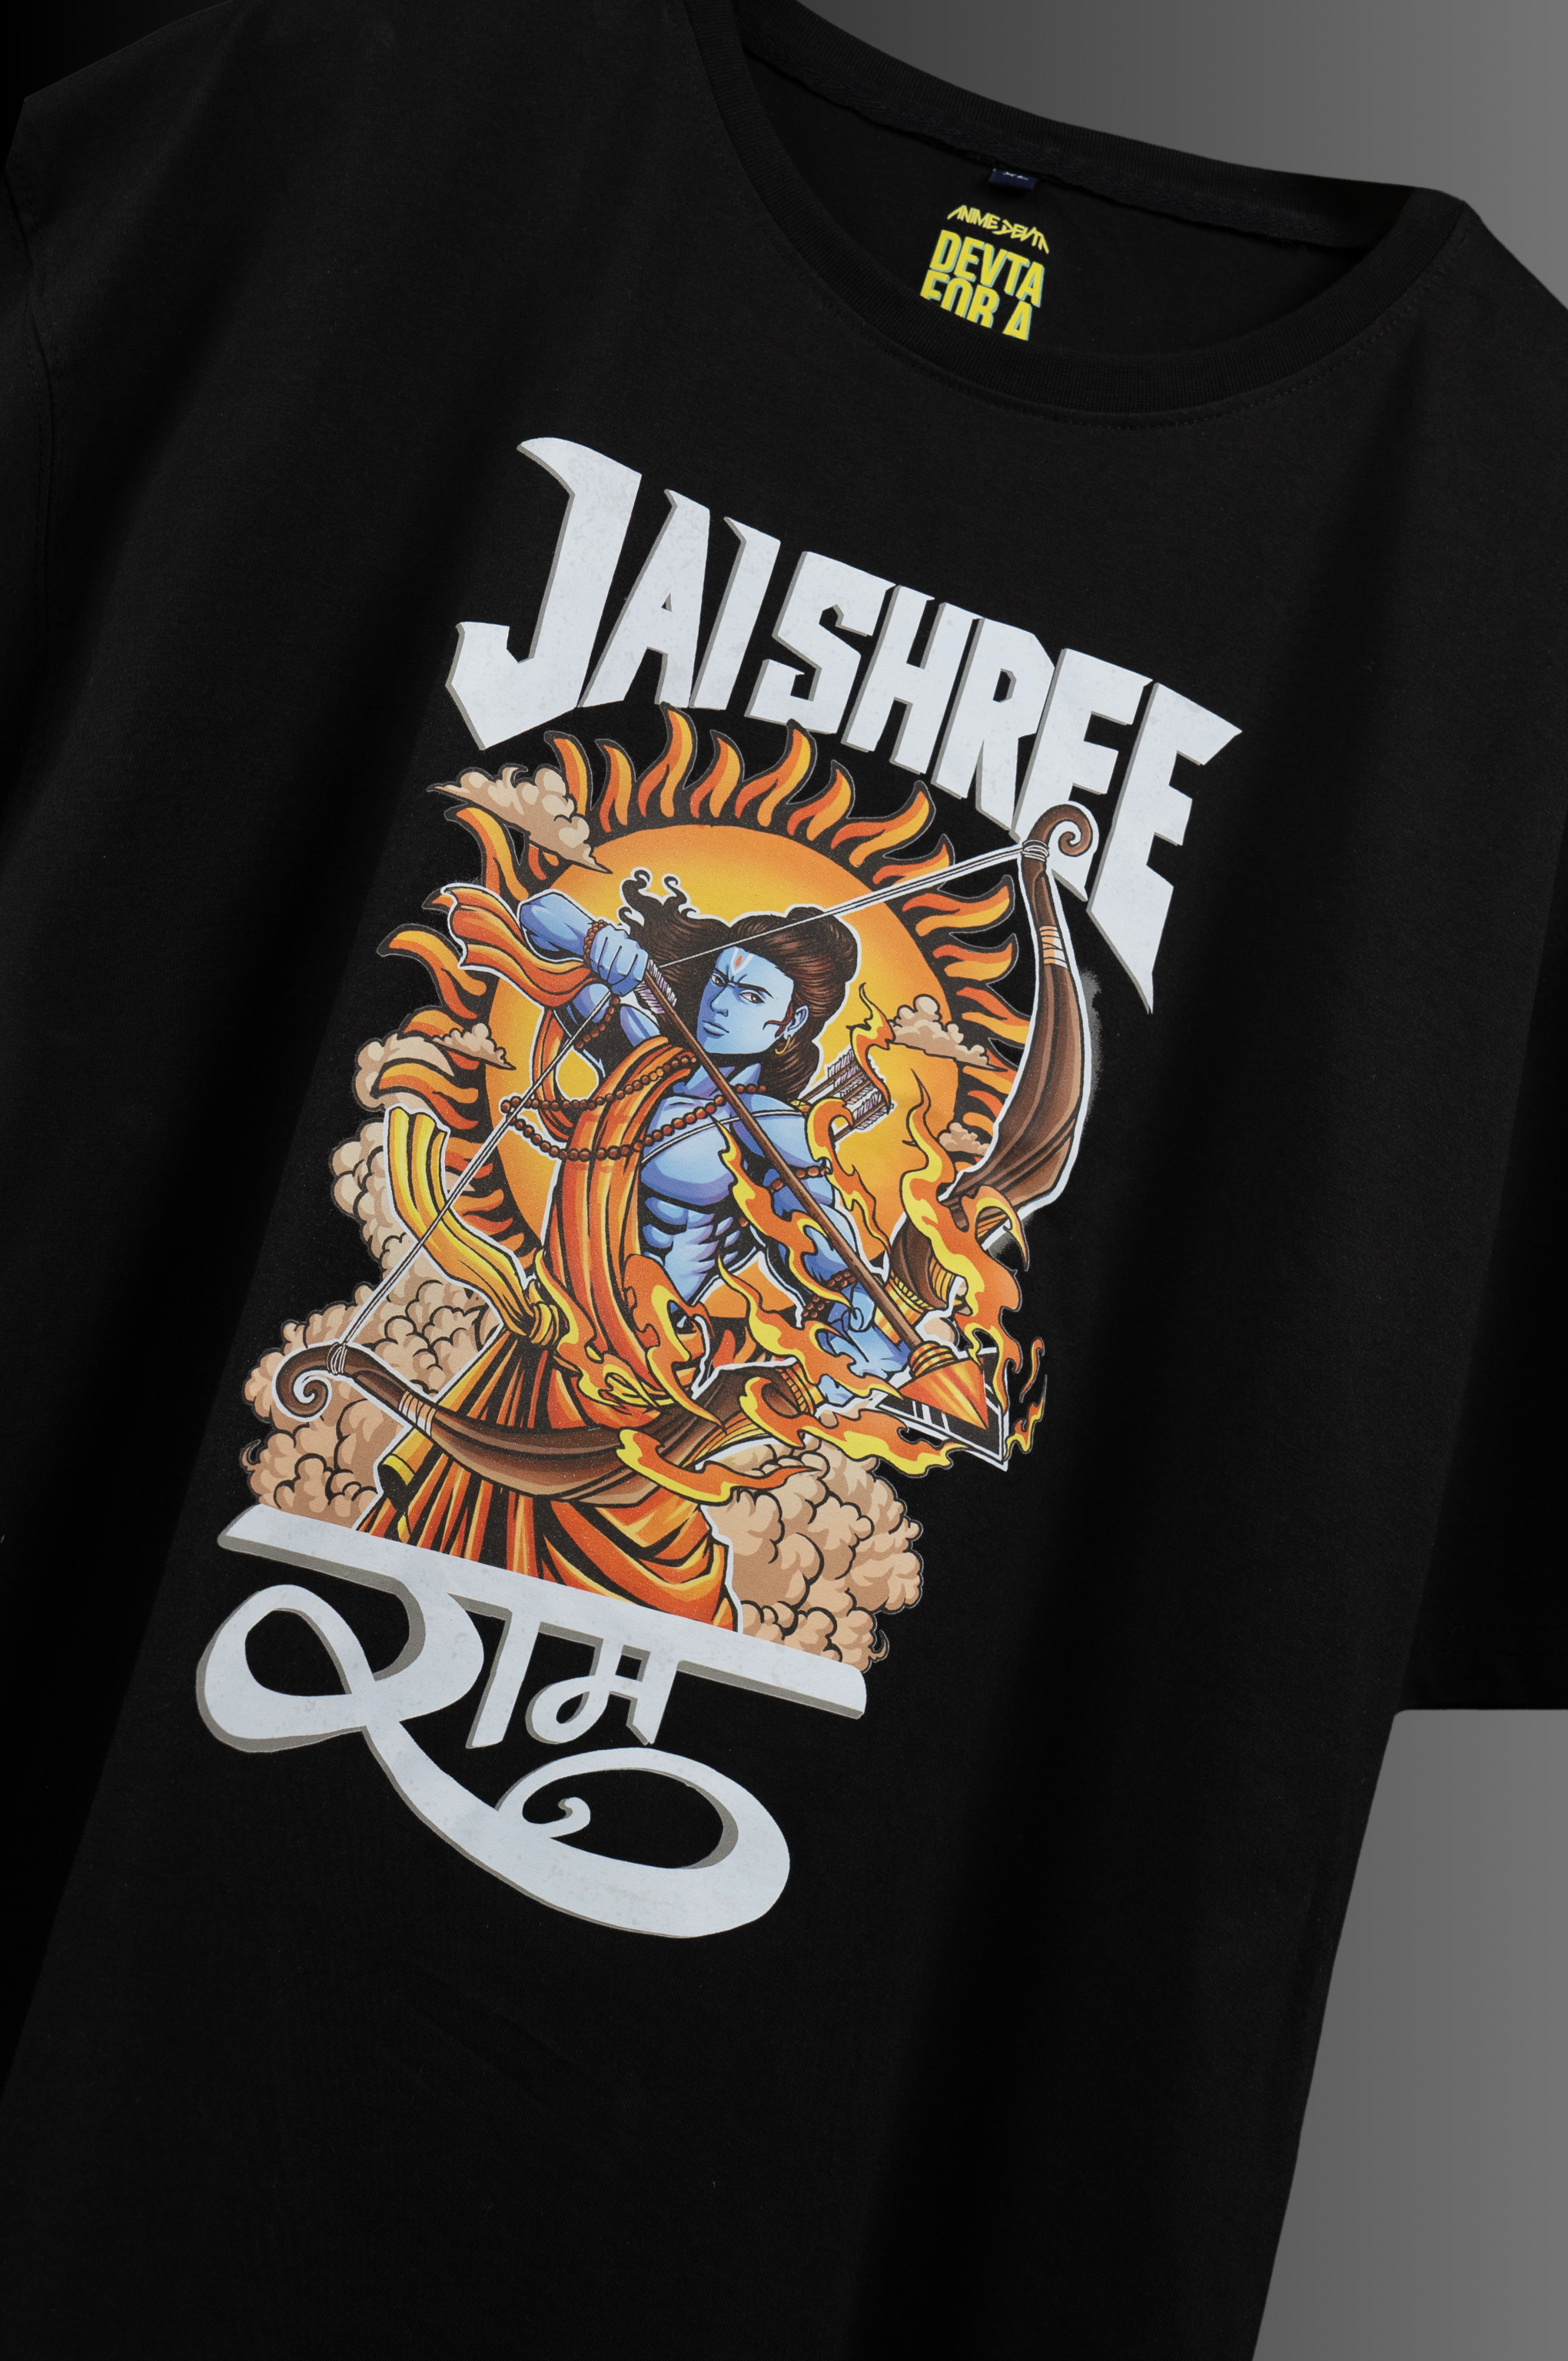 Jai Shree Ram : Suryavanshi Oversized Tshirt